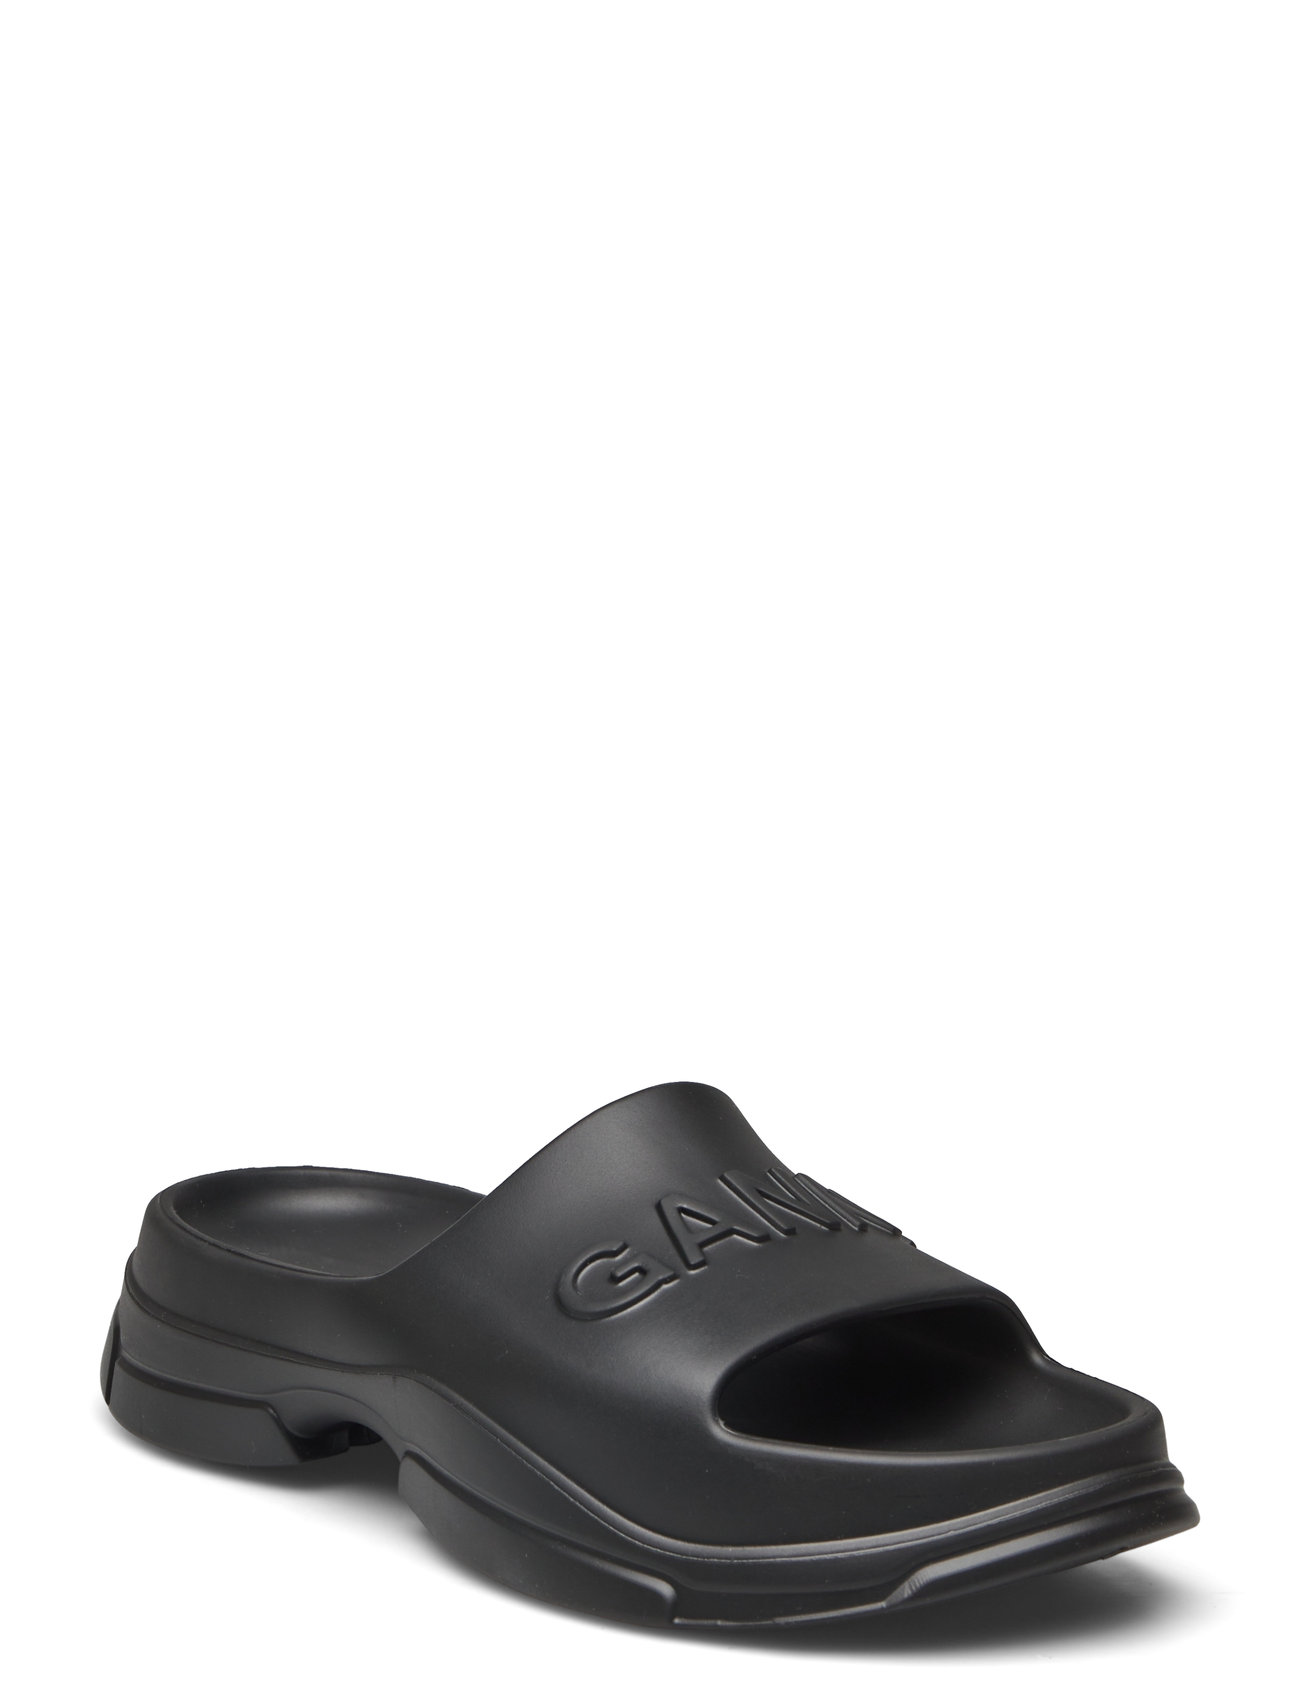 Light Weight Designers Summer Shoes Sandals Pool Sliders Black Ganni